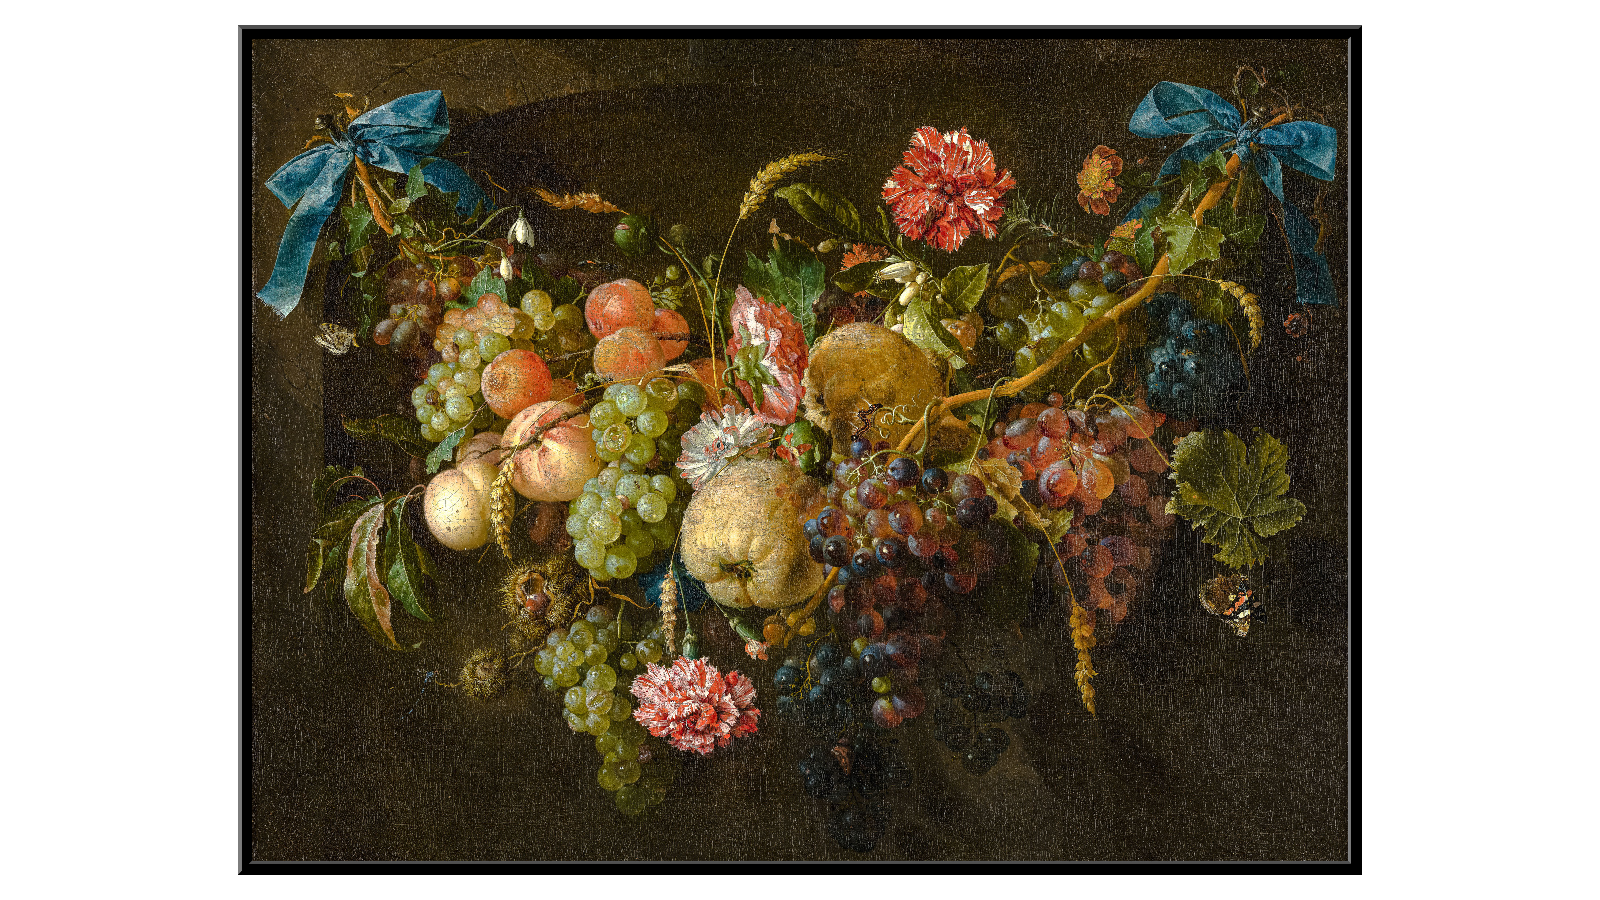 Garland of Fruit and Flowers - Jan Davidszoon de Heem